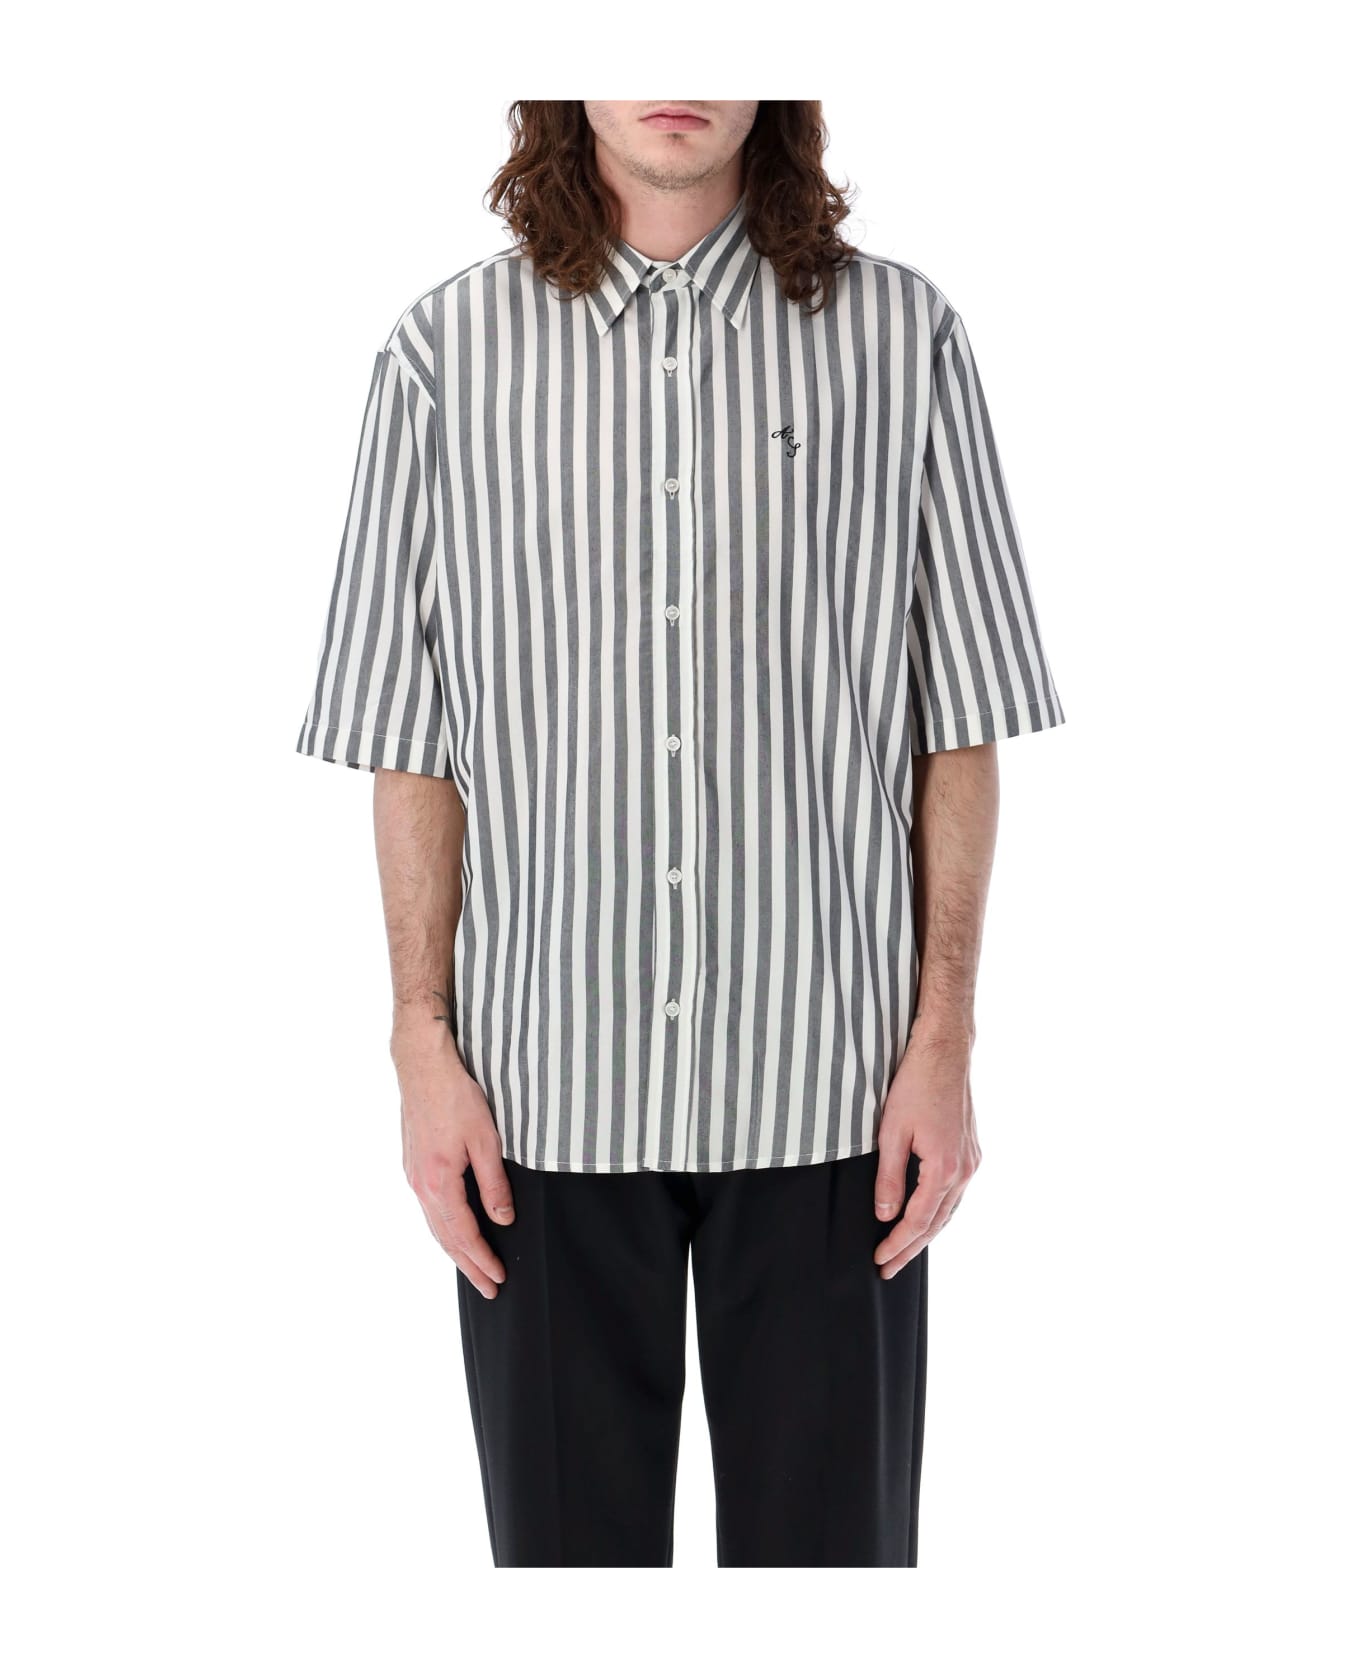 Acne Studios Stripe Button-up Shirt - WHITE BLACK STRIPES